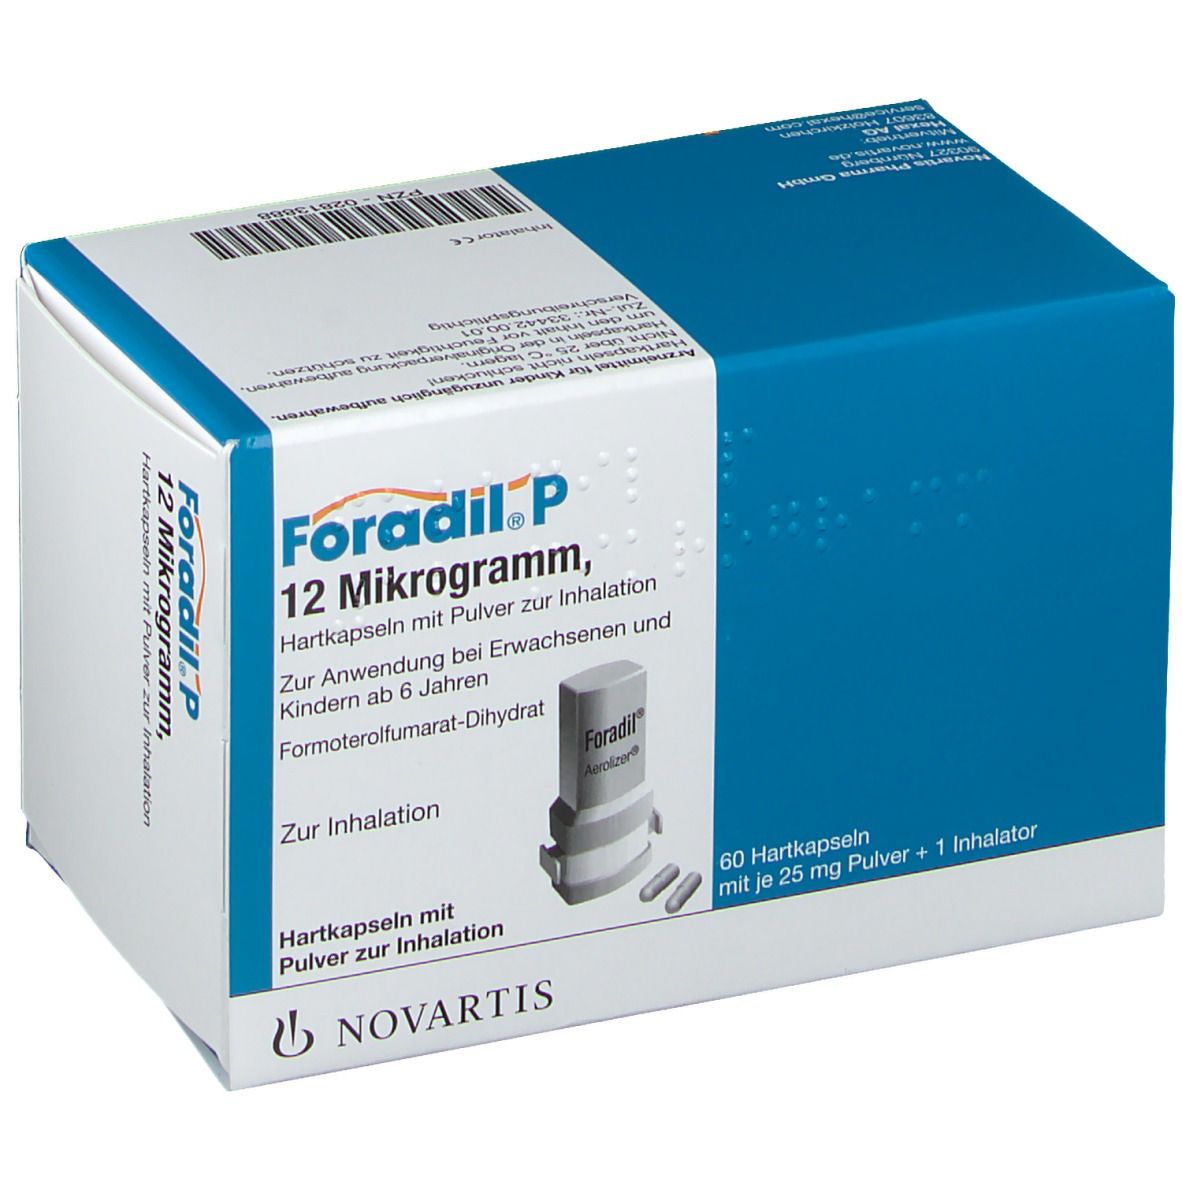 Foradil® P 12 µg